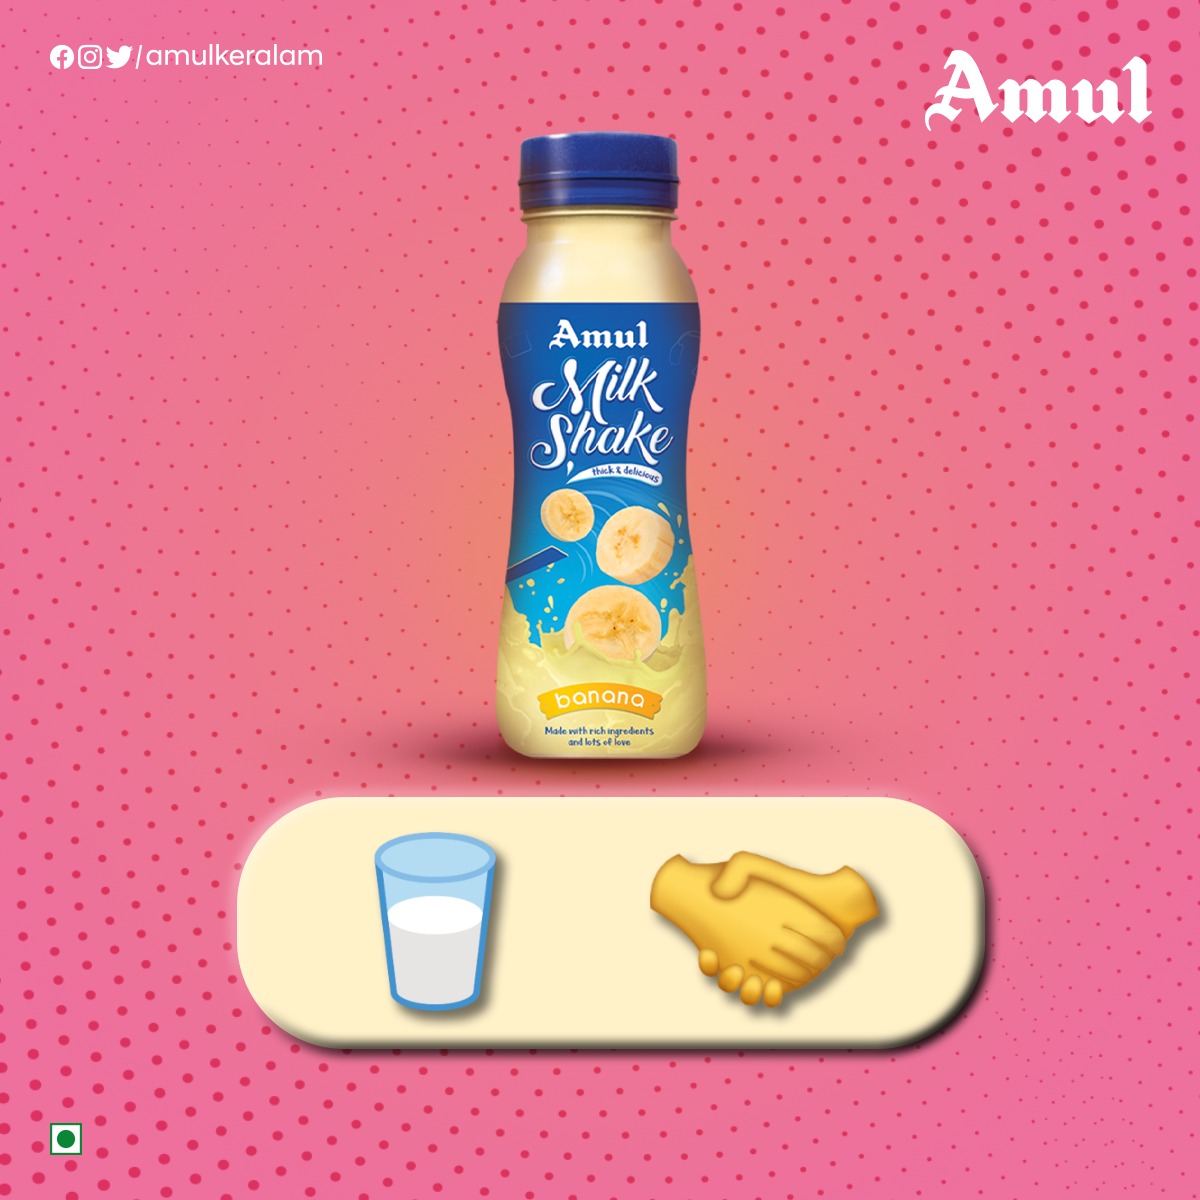 Emojis Decode ചെയ്യൂ

#Amul #Amulkeralam #Amulmilkshake #milkshake #summer